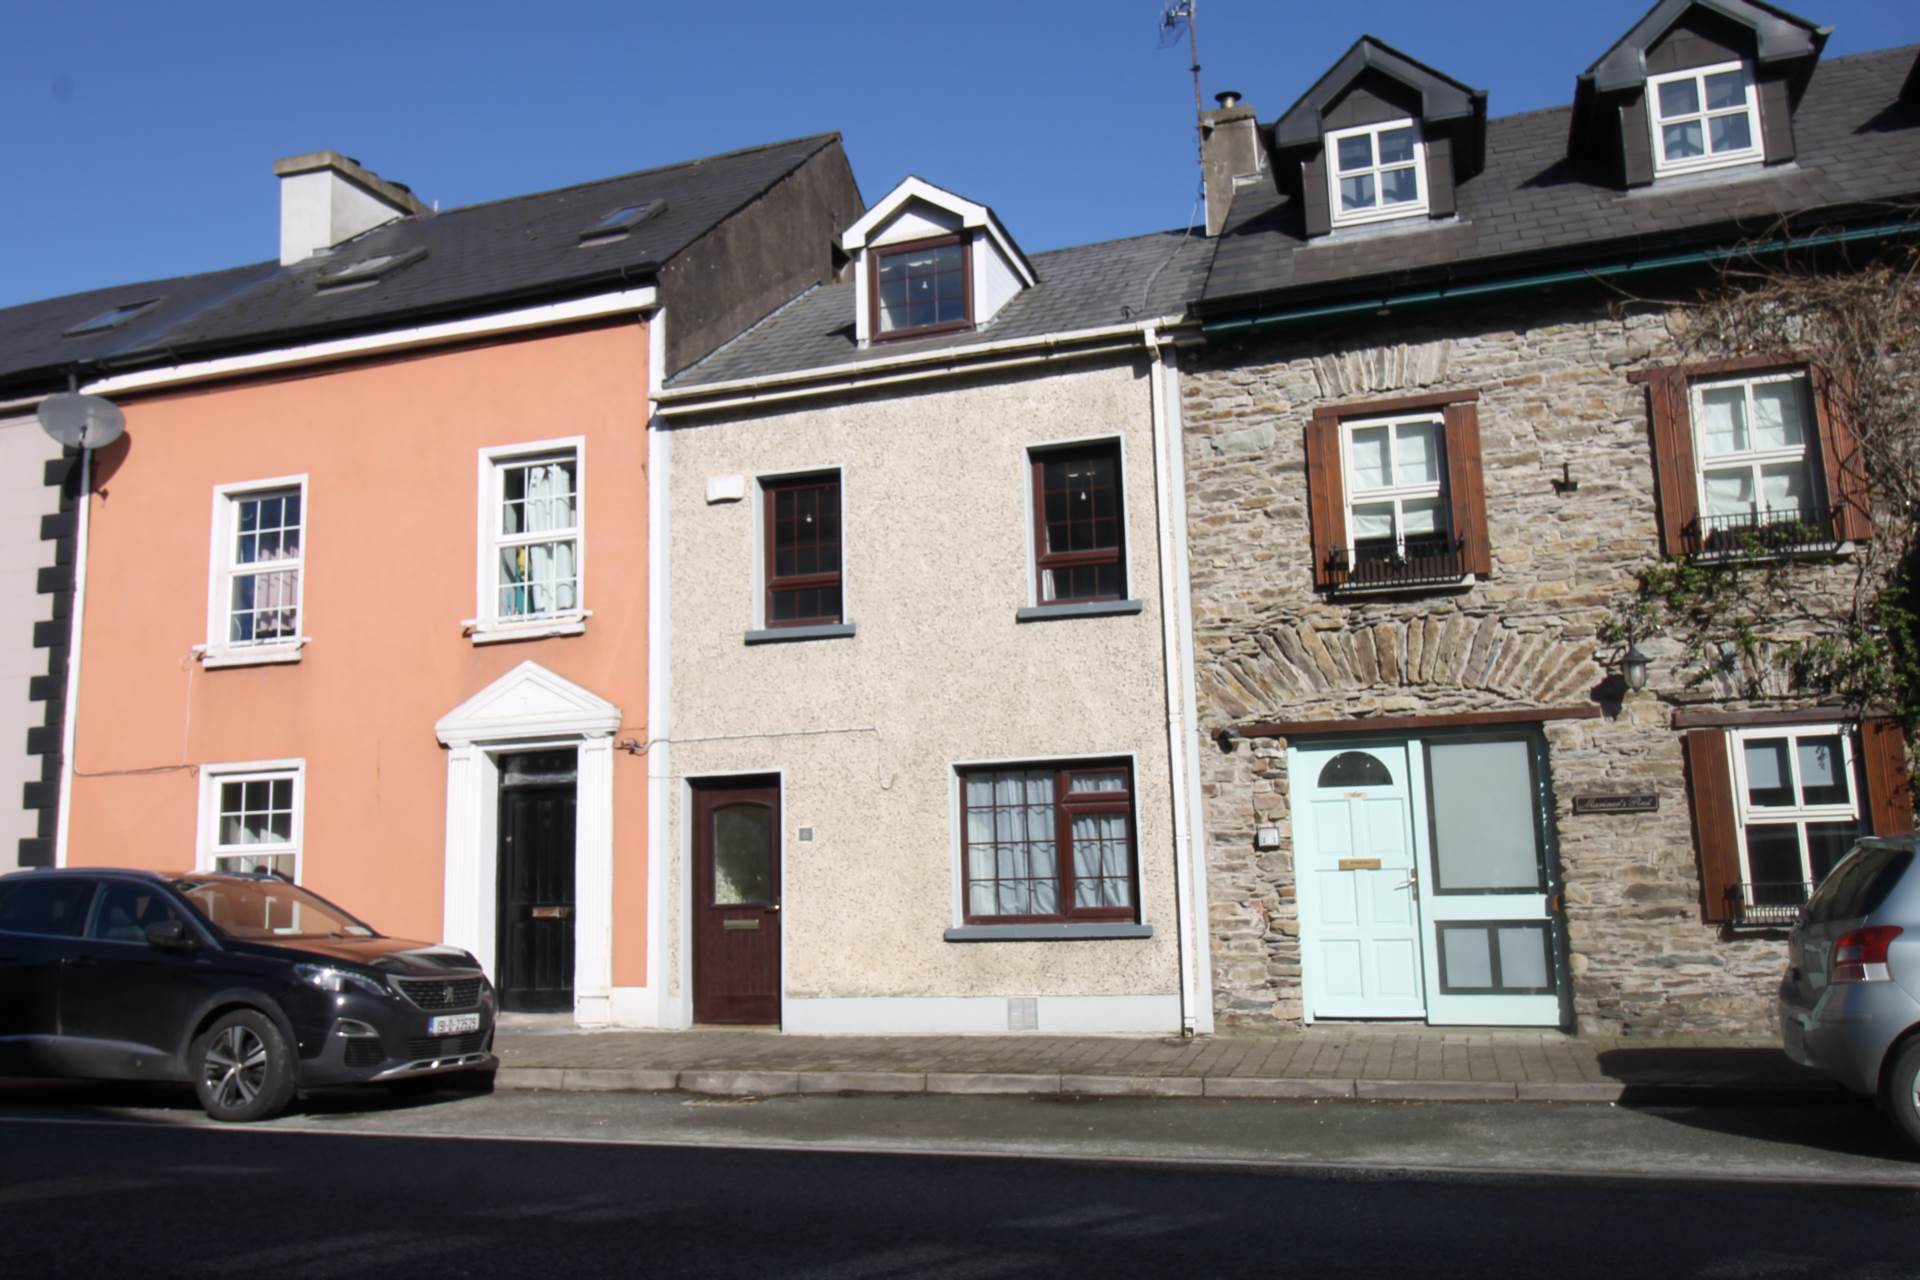 Photo of Main Street, Innishannon, County Cork, T12 HN7P